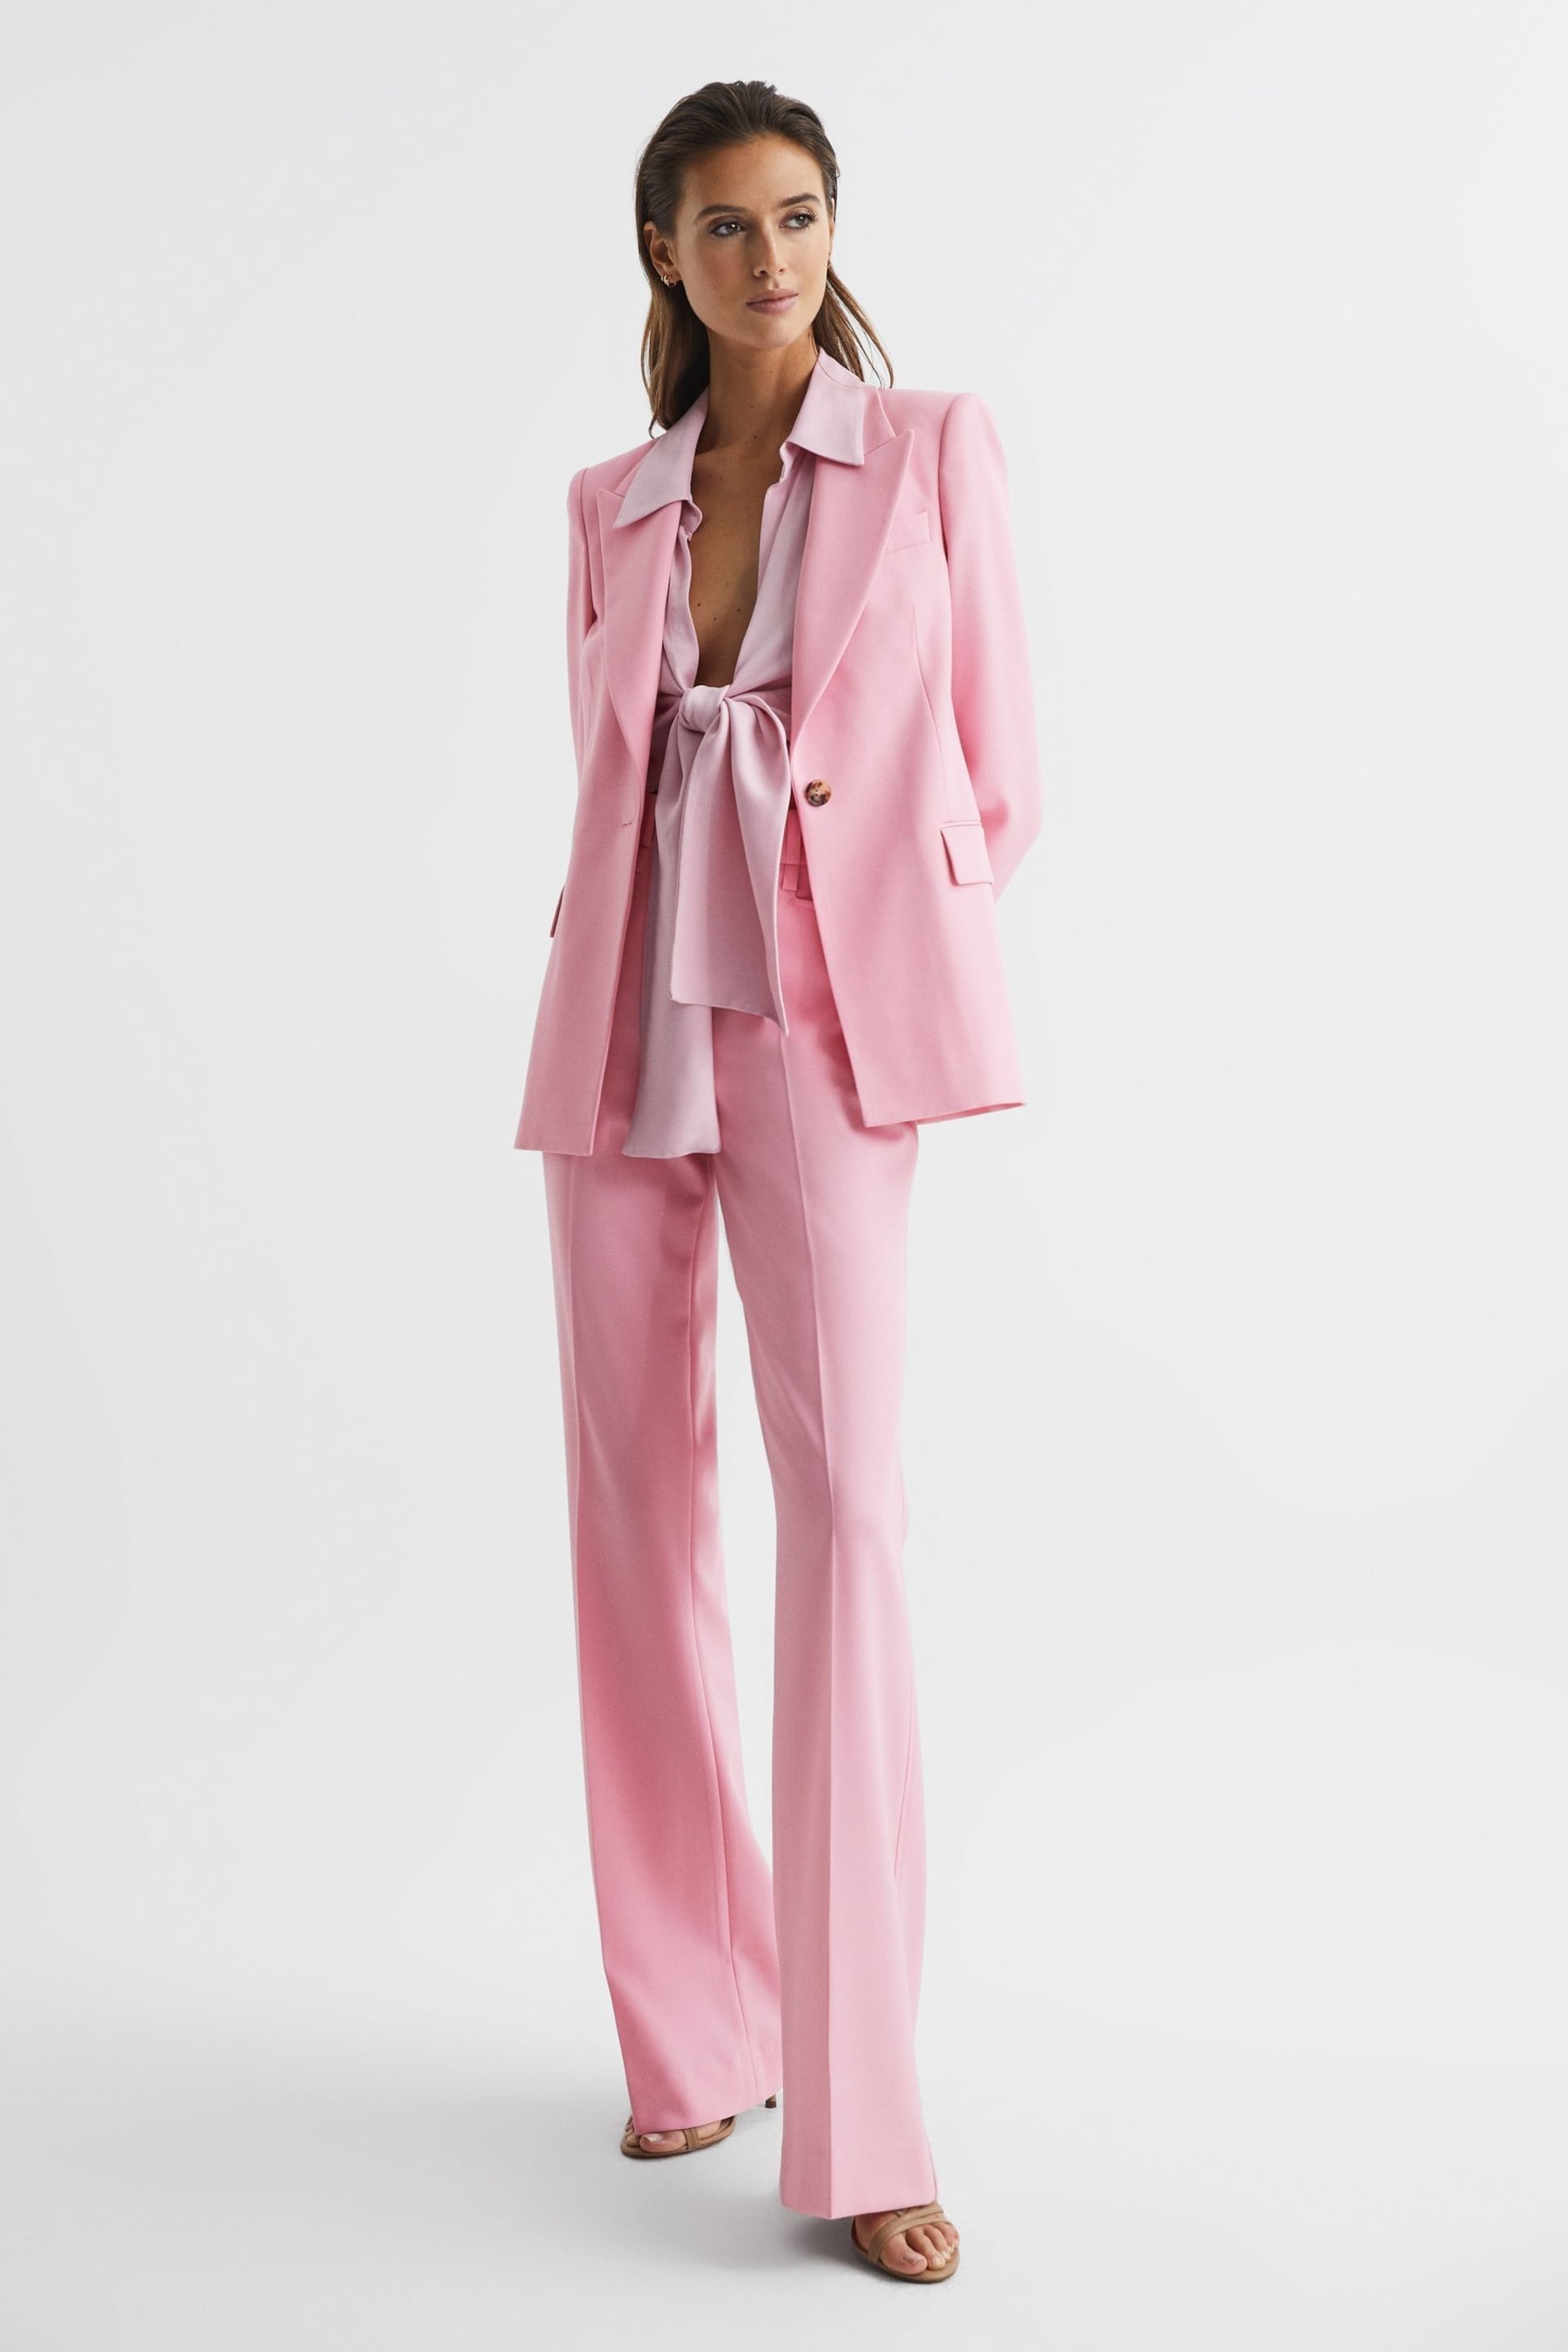 Reiss Pink Blair Single Breasted Wool Blend Blazer - Image 5 of 7